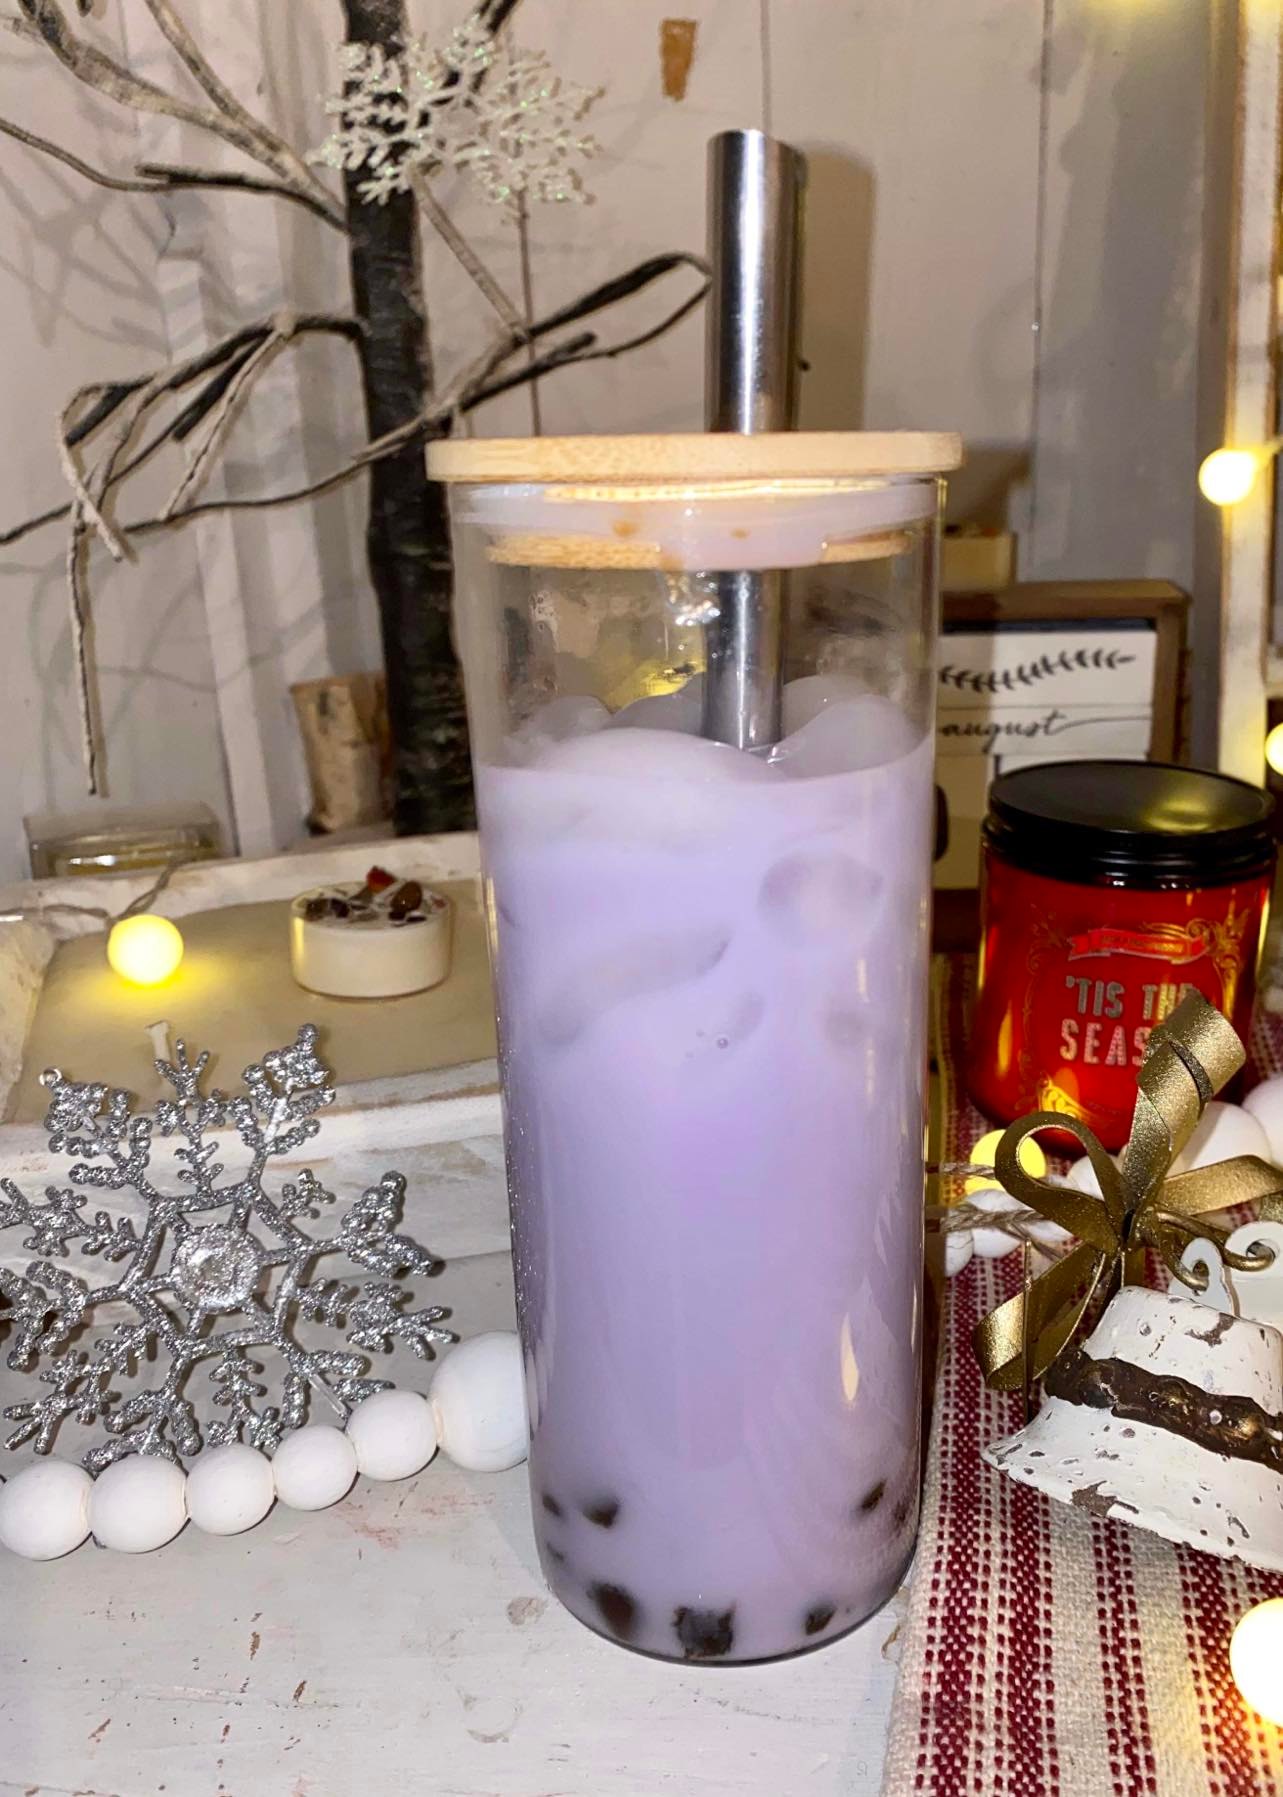 Pearly Drinks, Matcha Milk Tea Kit, DIY Bubble Tea Kit